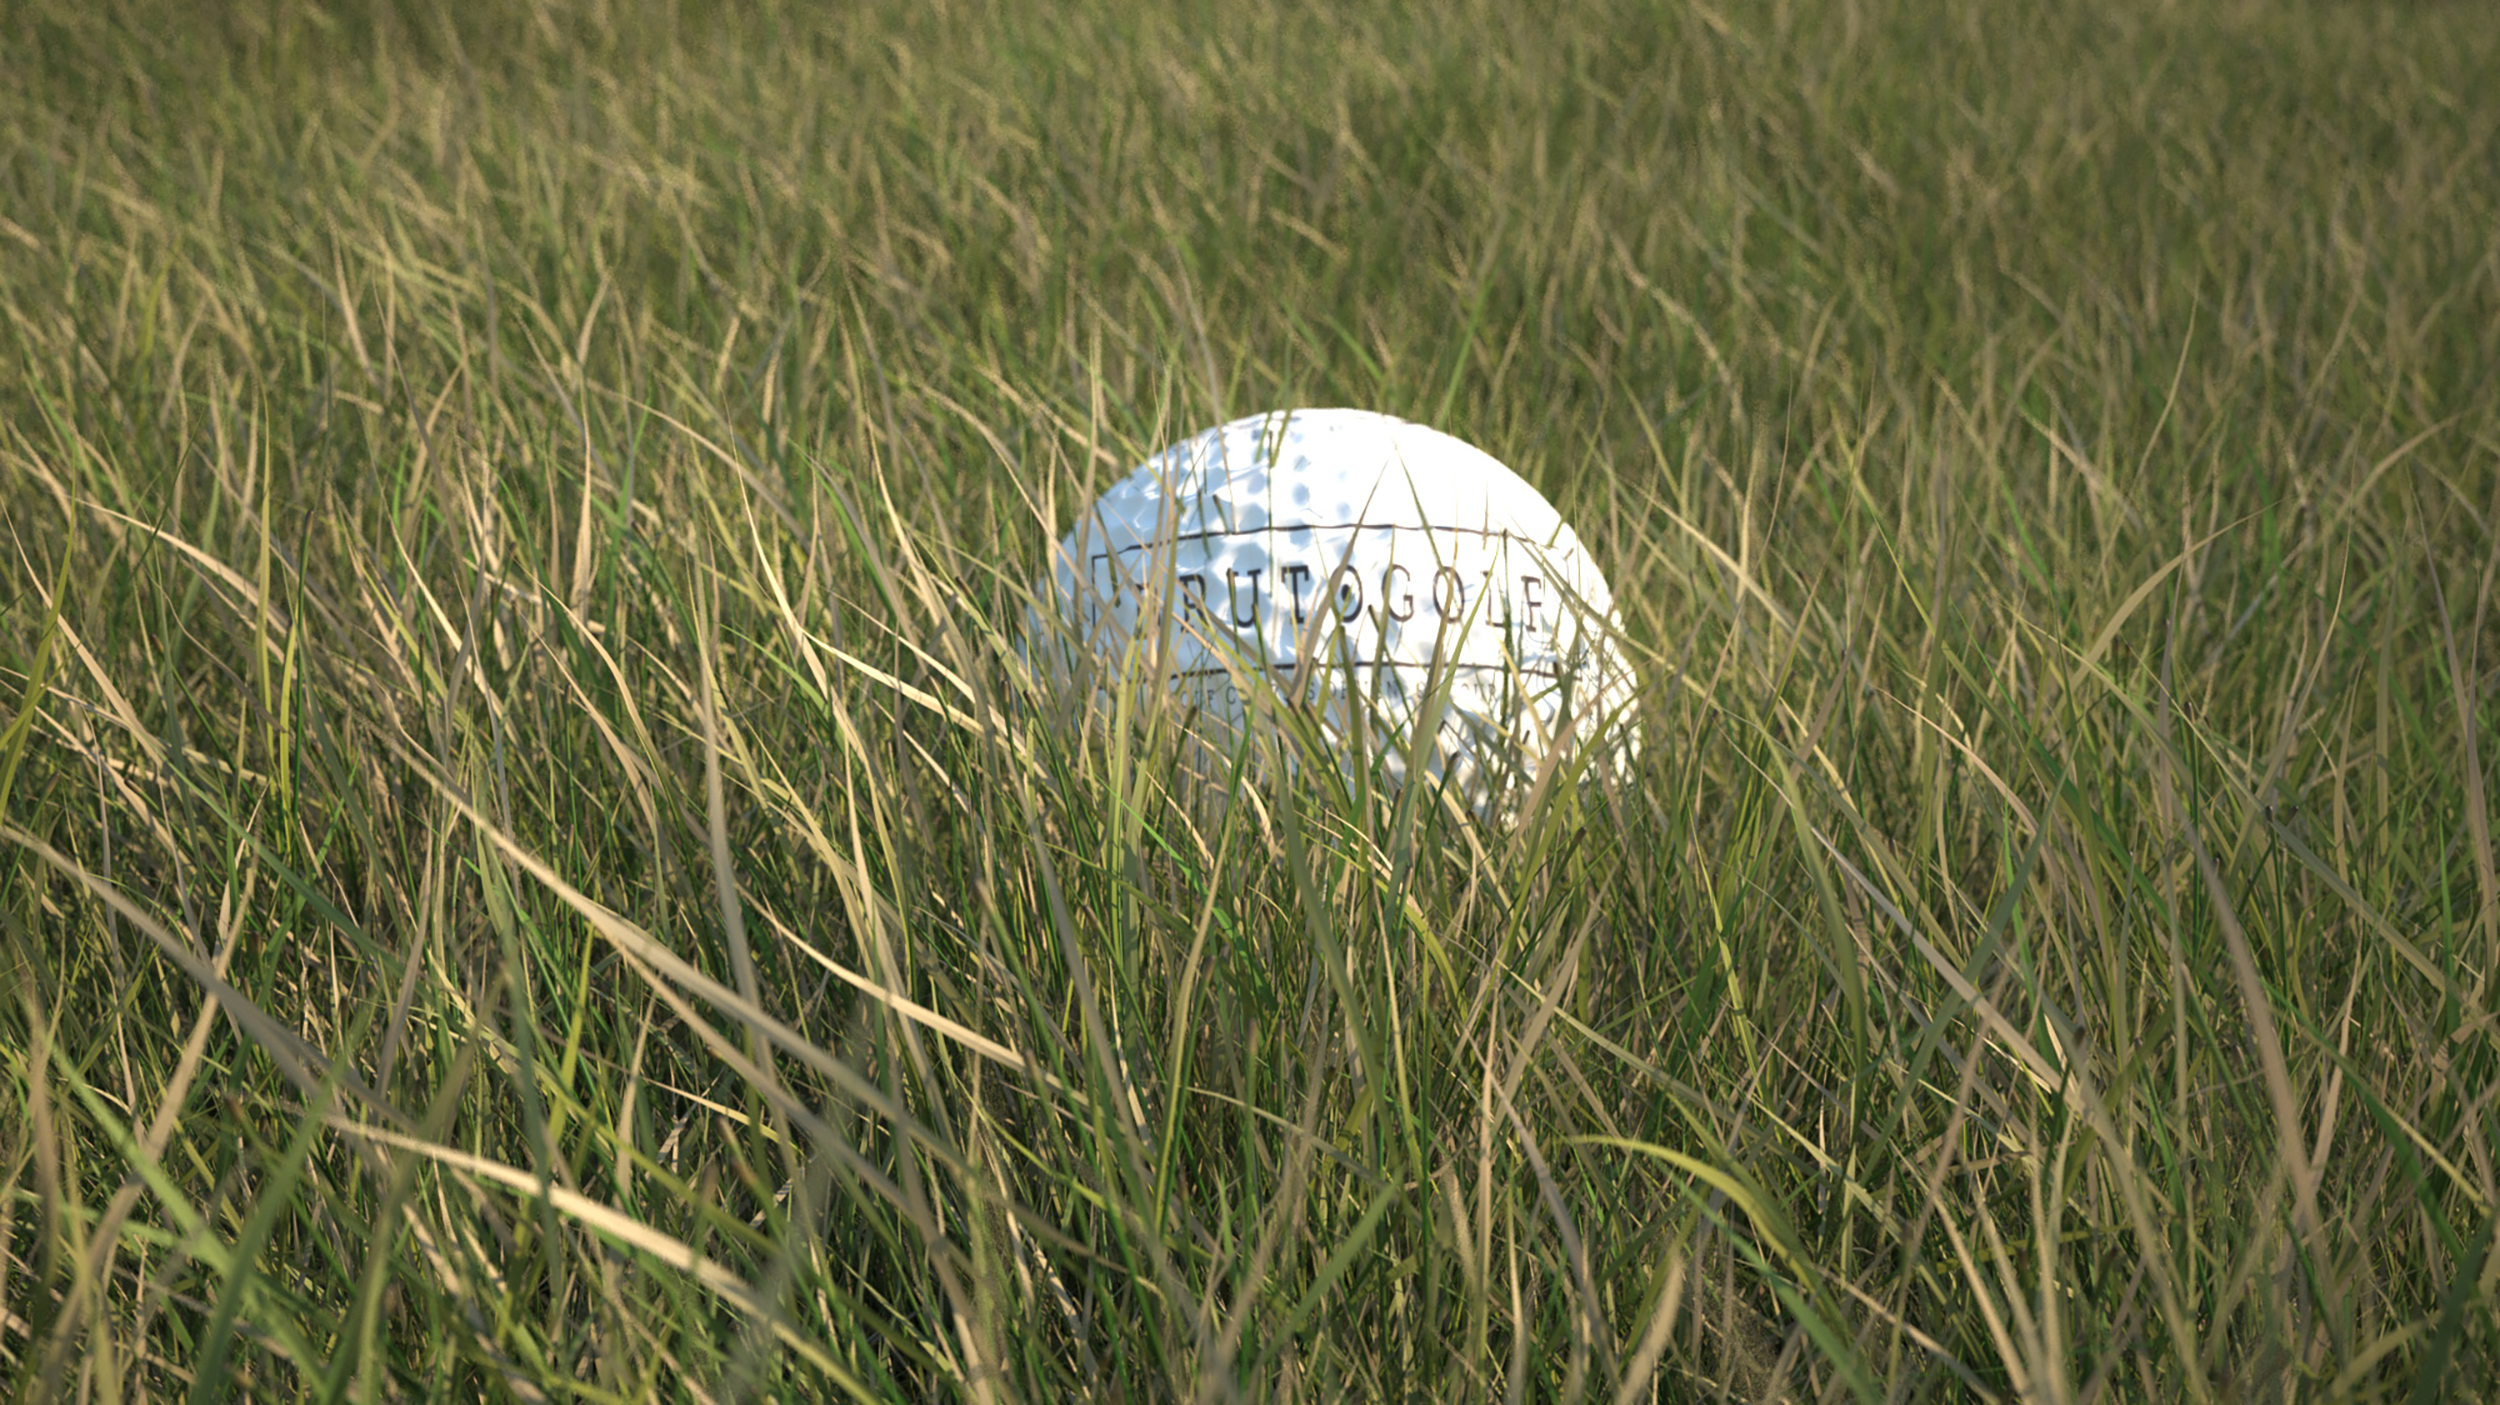 bruto golf course design concept brutogolf